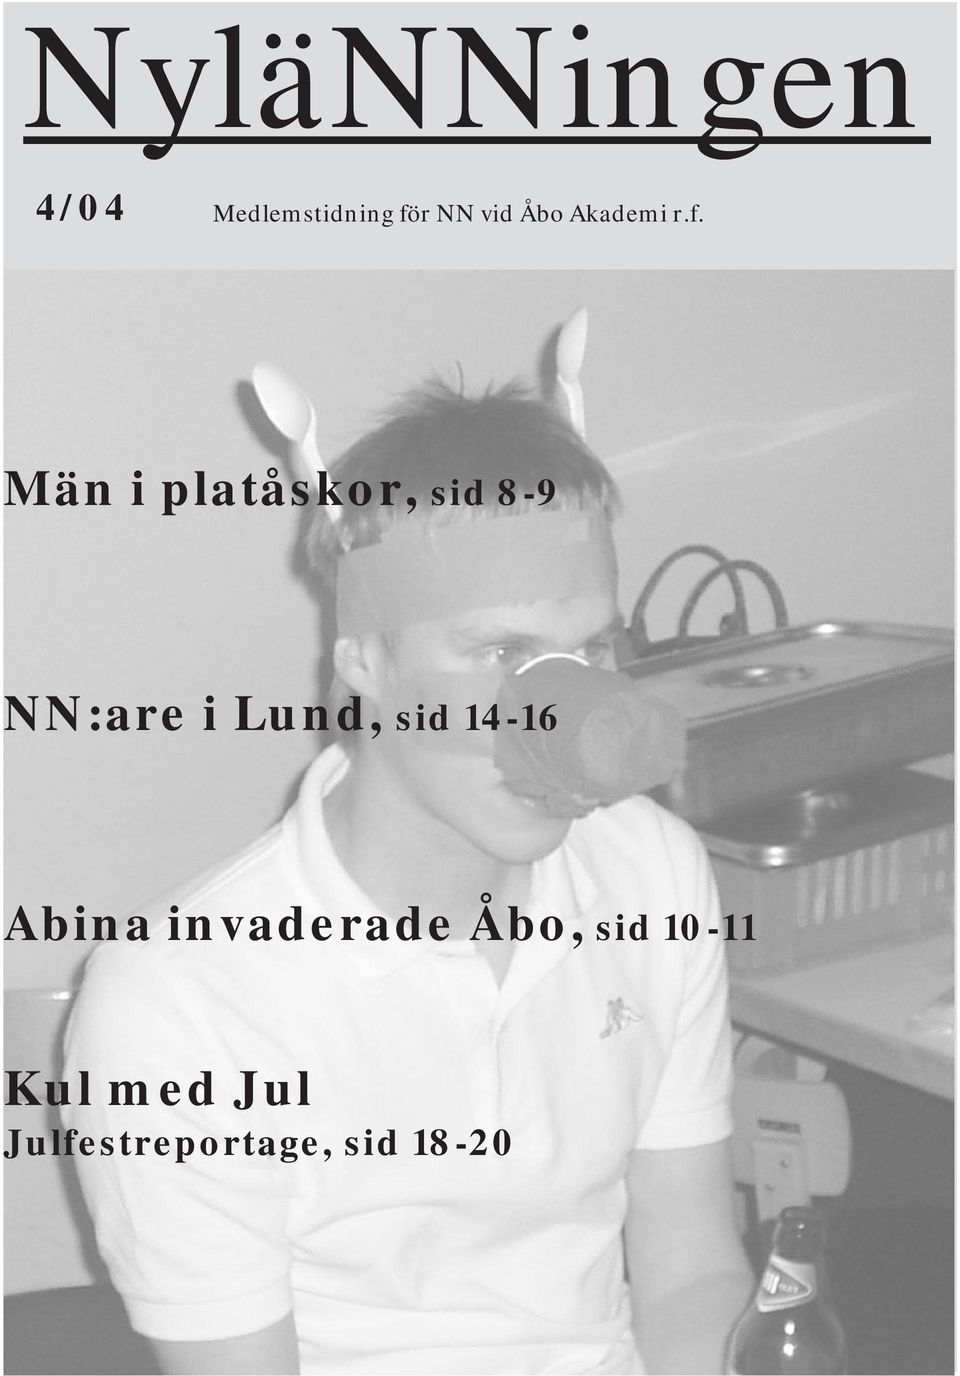 Lund, sid 14-16 Abina invaderade Åbo, sid